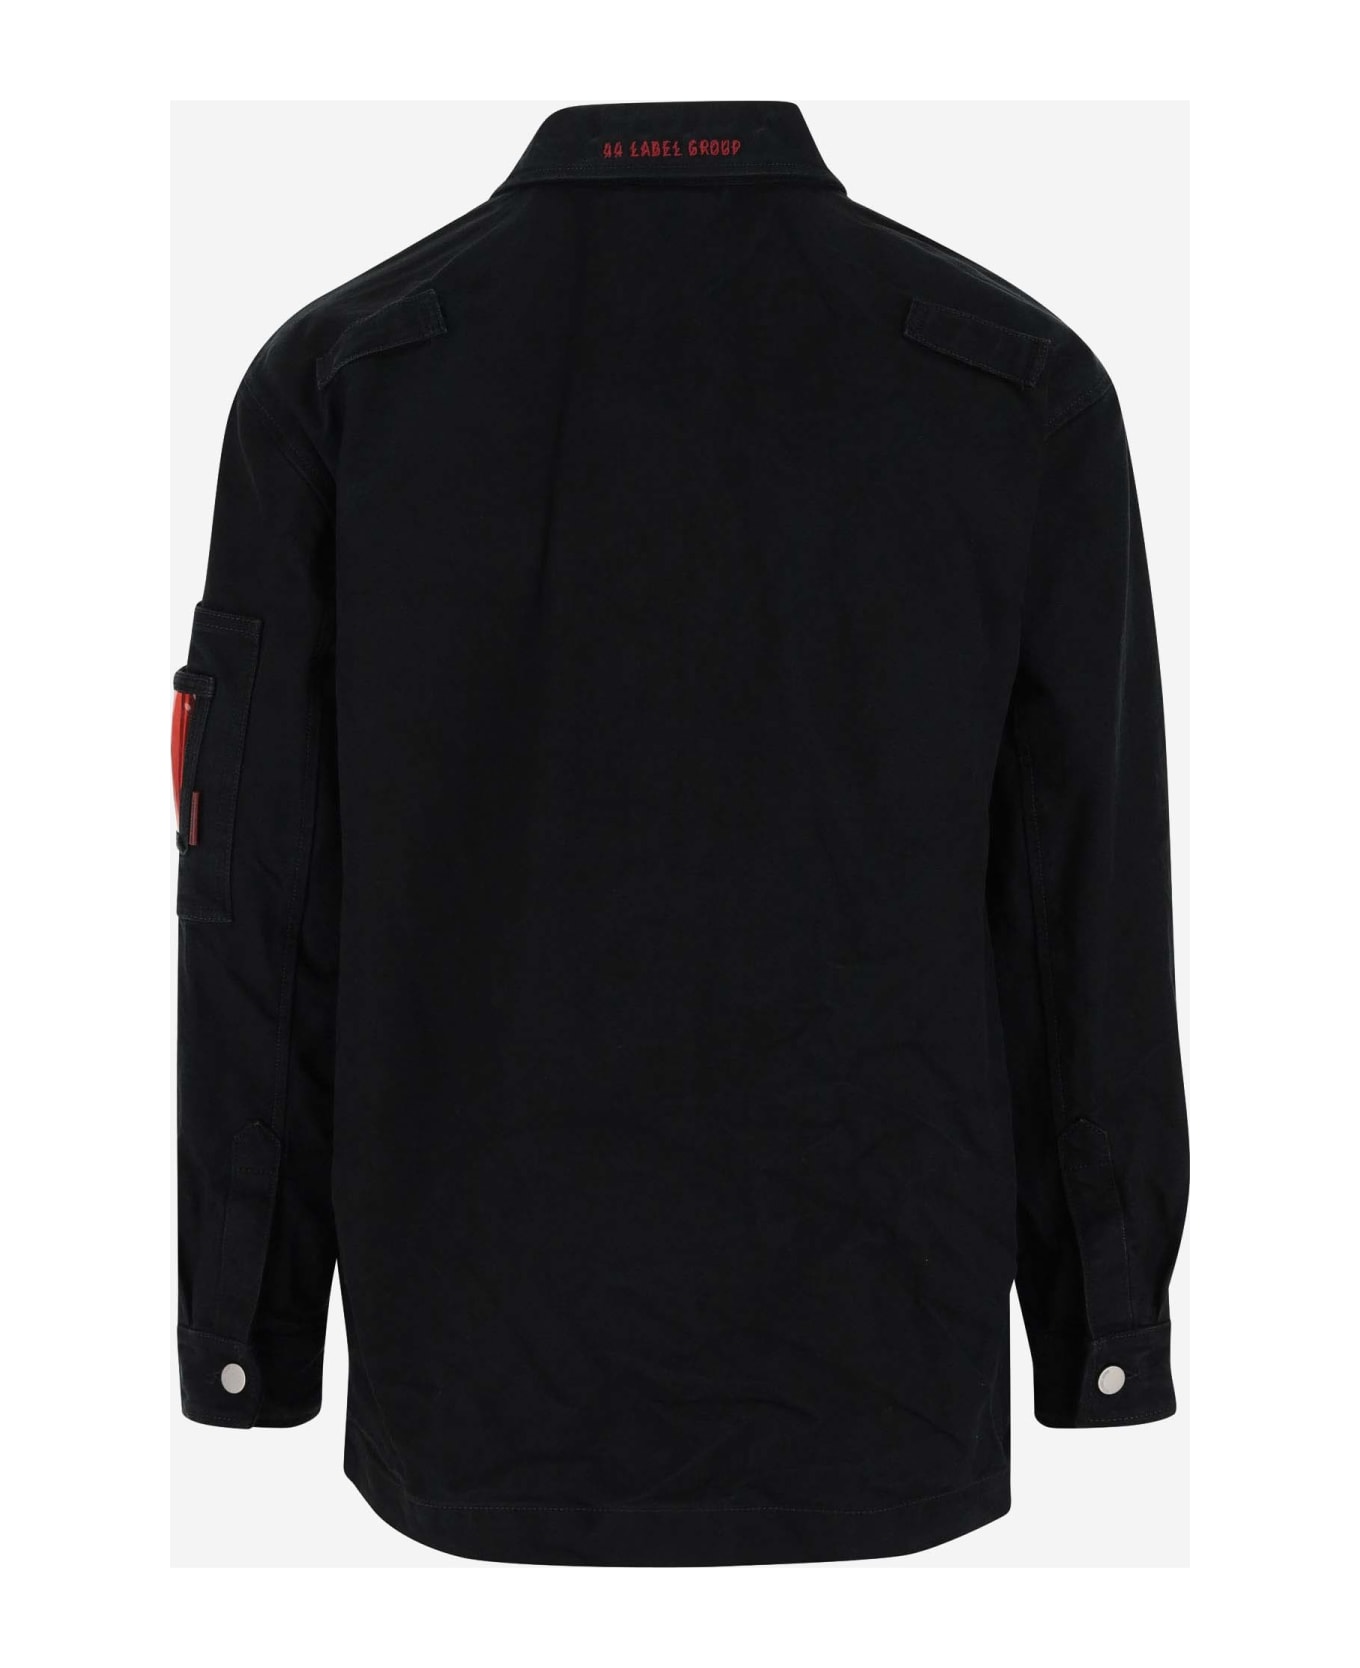 44 Label Group Cotton Denim Shirt With Logo - Black